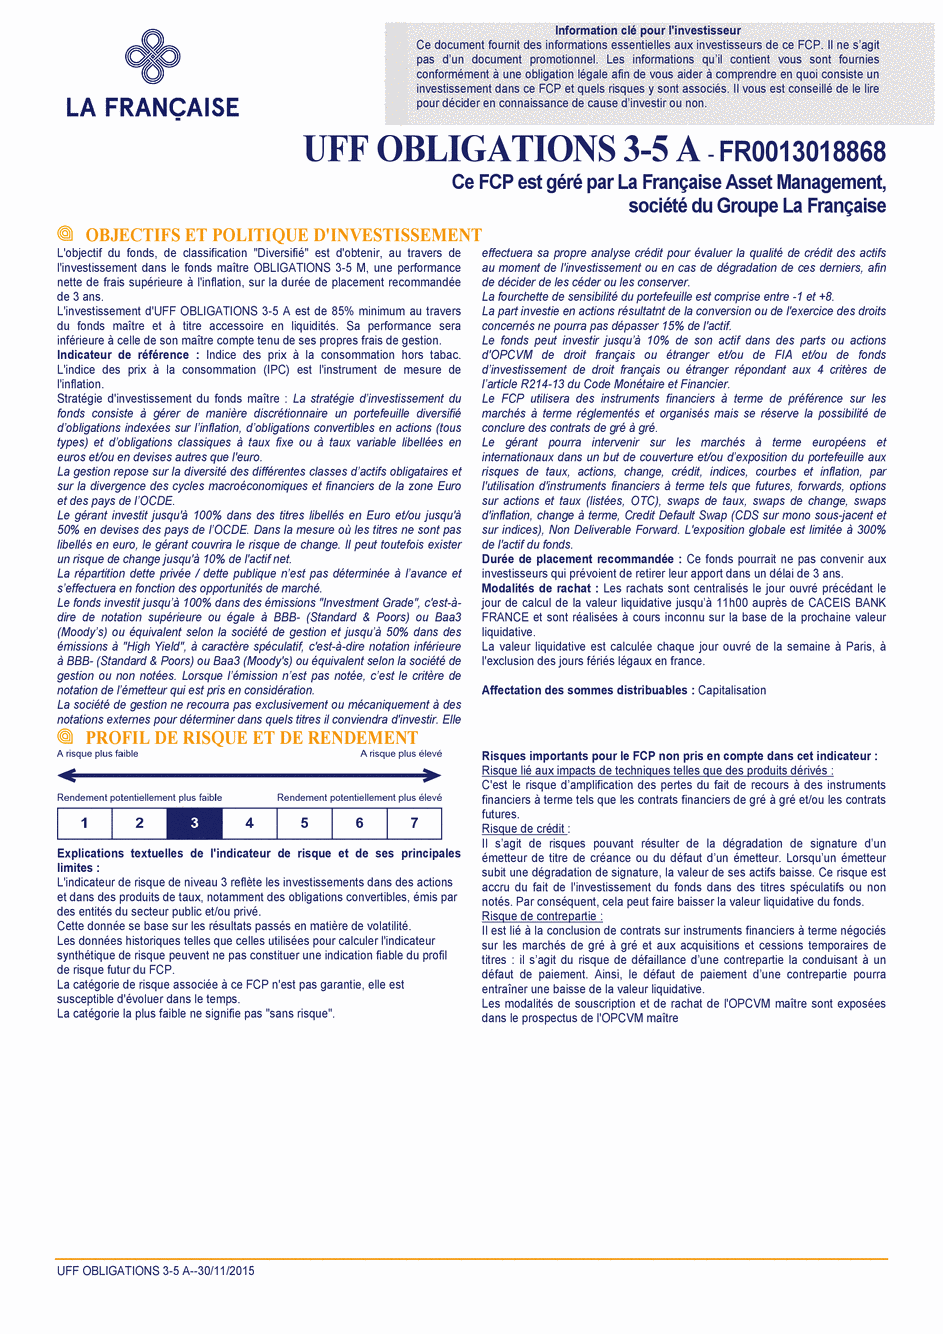 DICI UFF Obligations 3-5 A - 30/11/2015 - Français